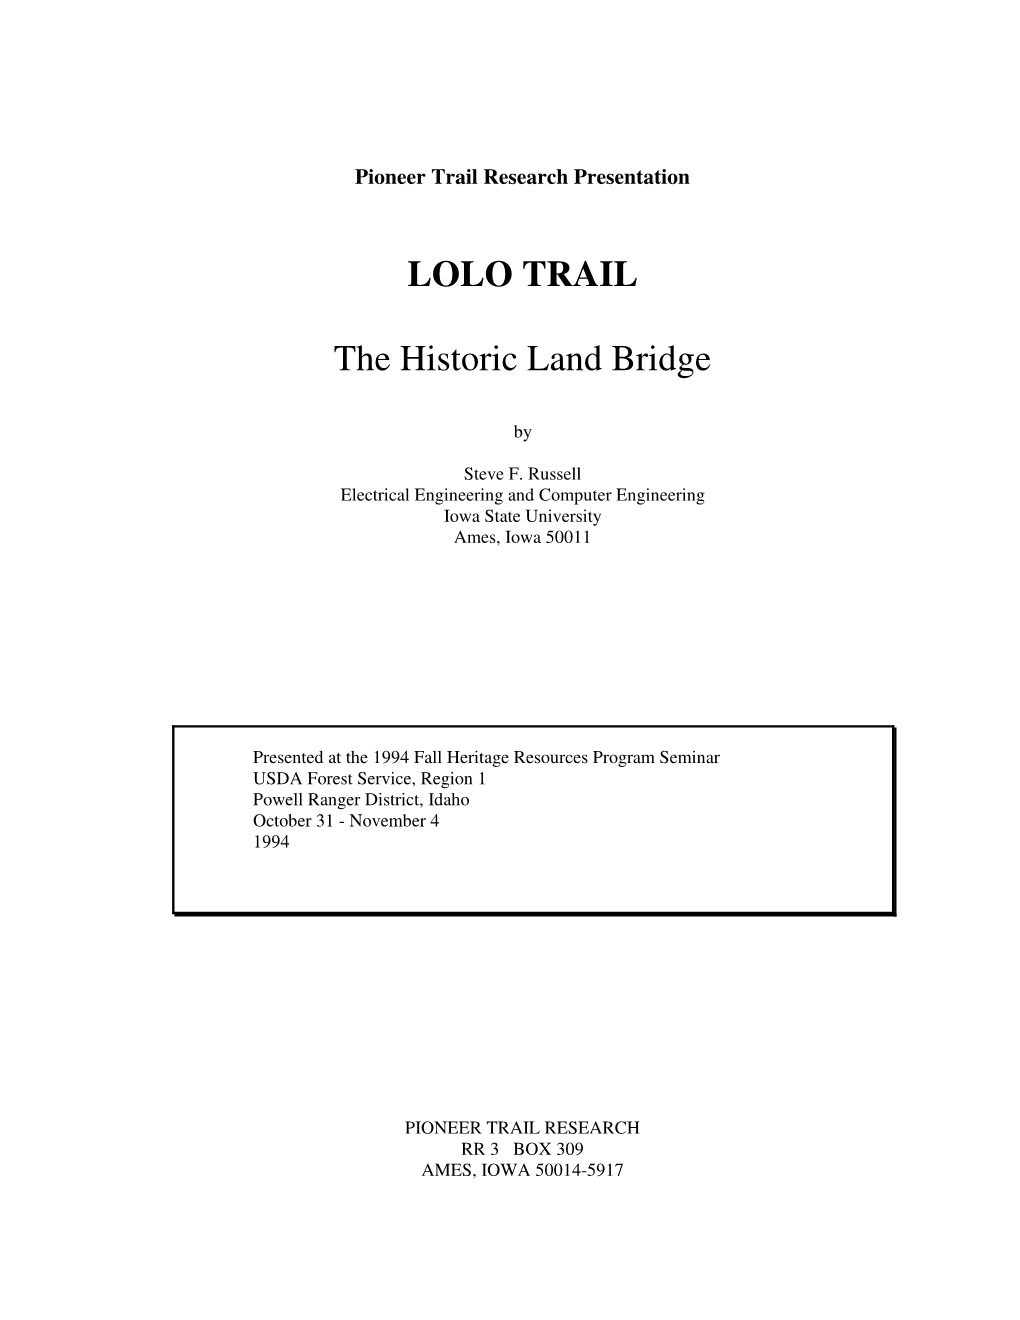 LOLO TRAIL the Historic Land Bridge